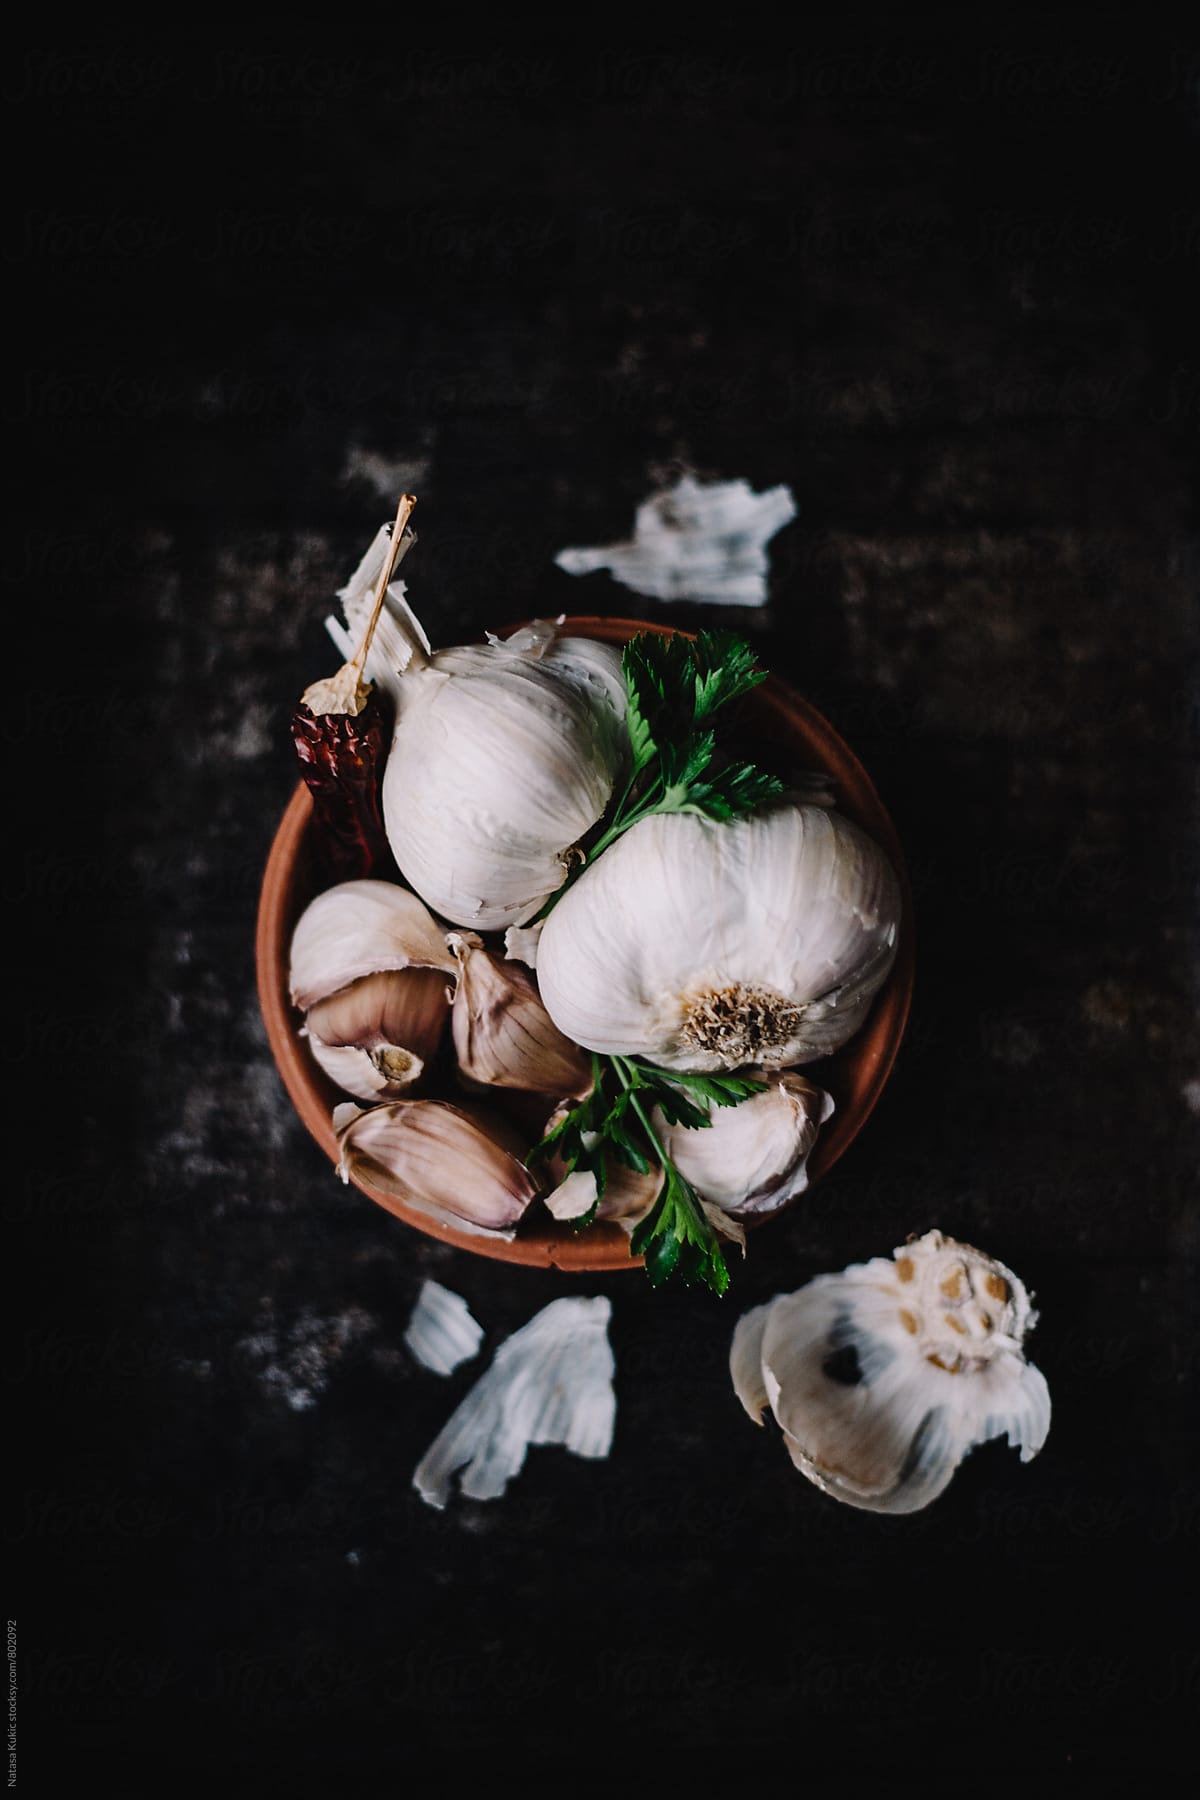 Garlic In Many Ways By Stocksy Contributor Natasa Kukic Stocksy